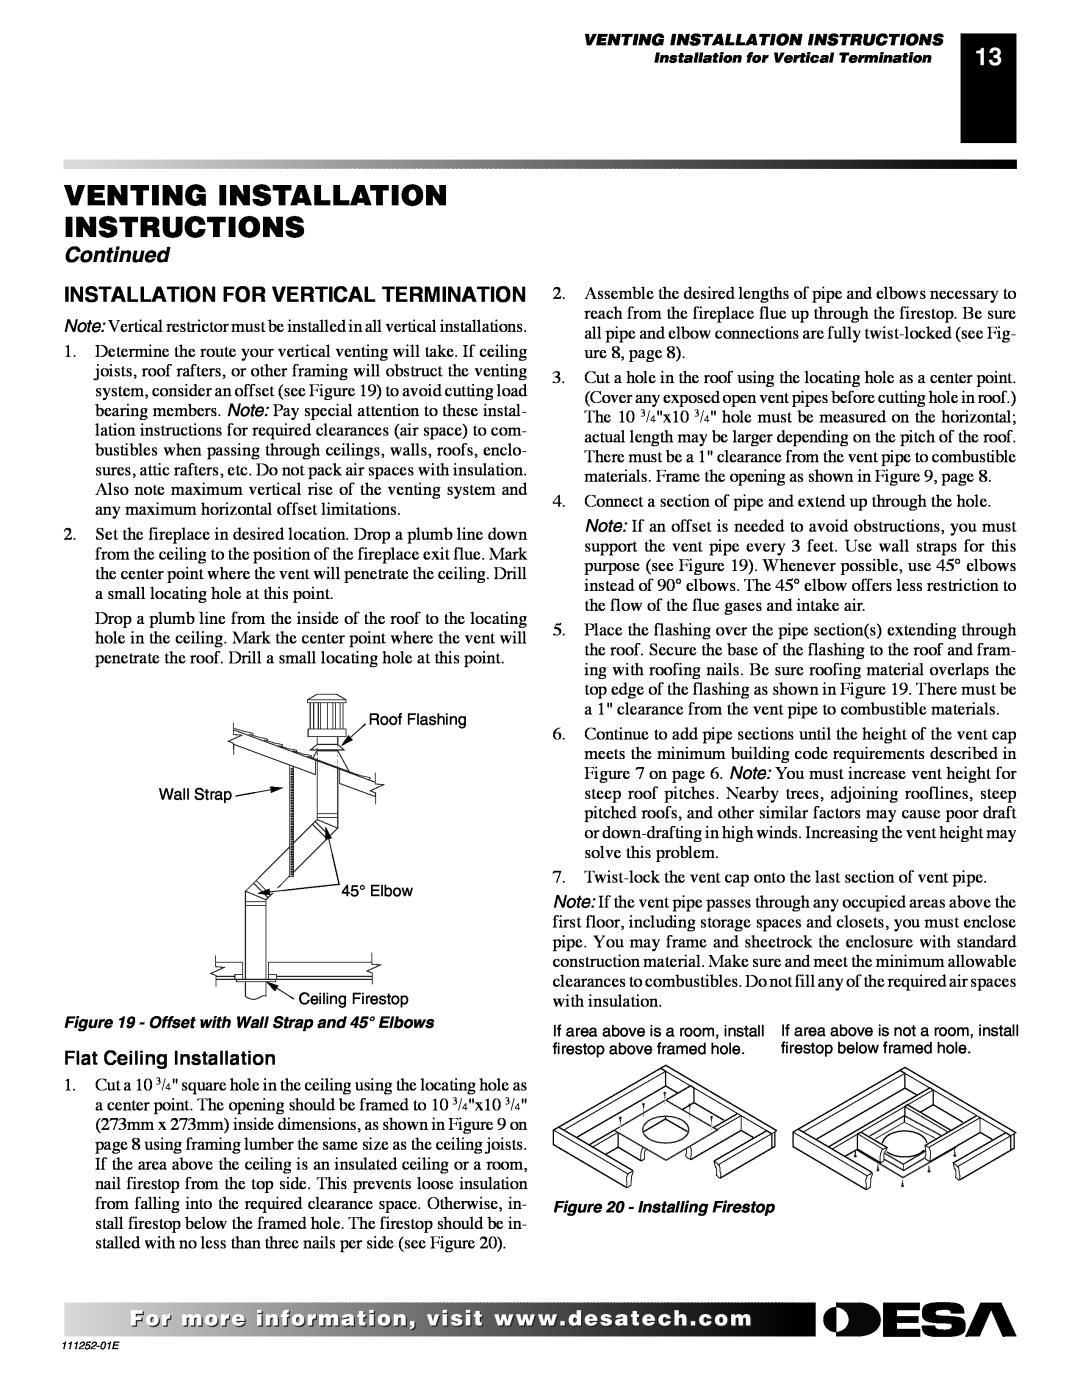 Desa (V)V36P-B SERIES, VV36PC1 SERIES Installation For Vertical Termination, Flat Ceiling Installation, Continued 